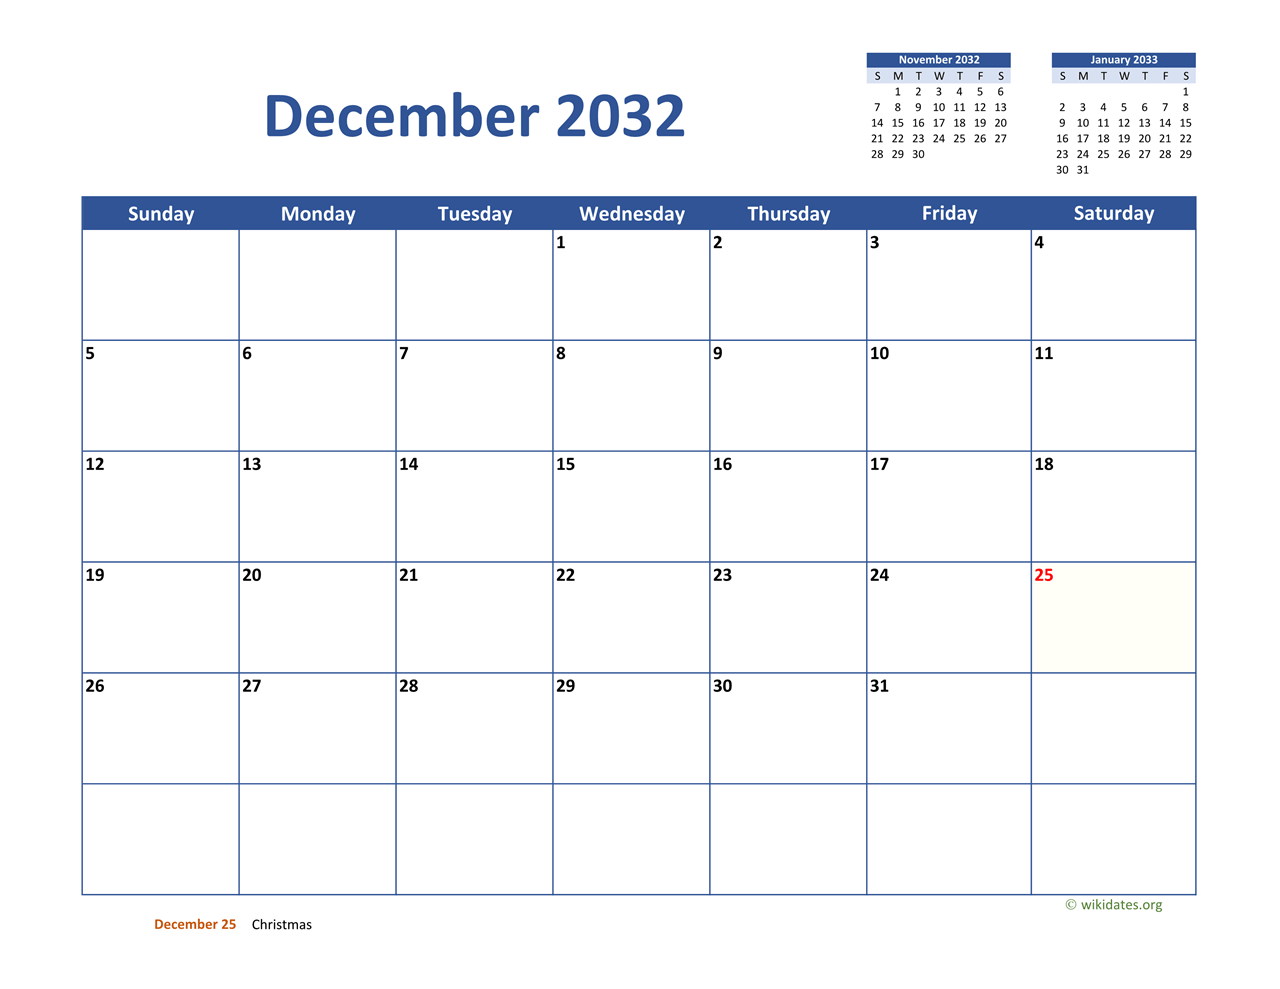 December 2032 Calendar Classic | WikiDates.org